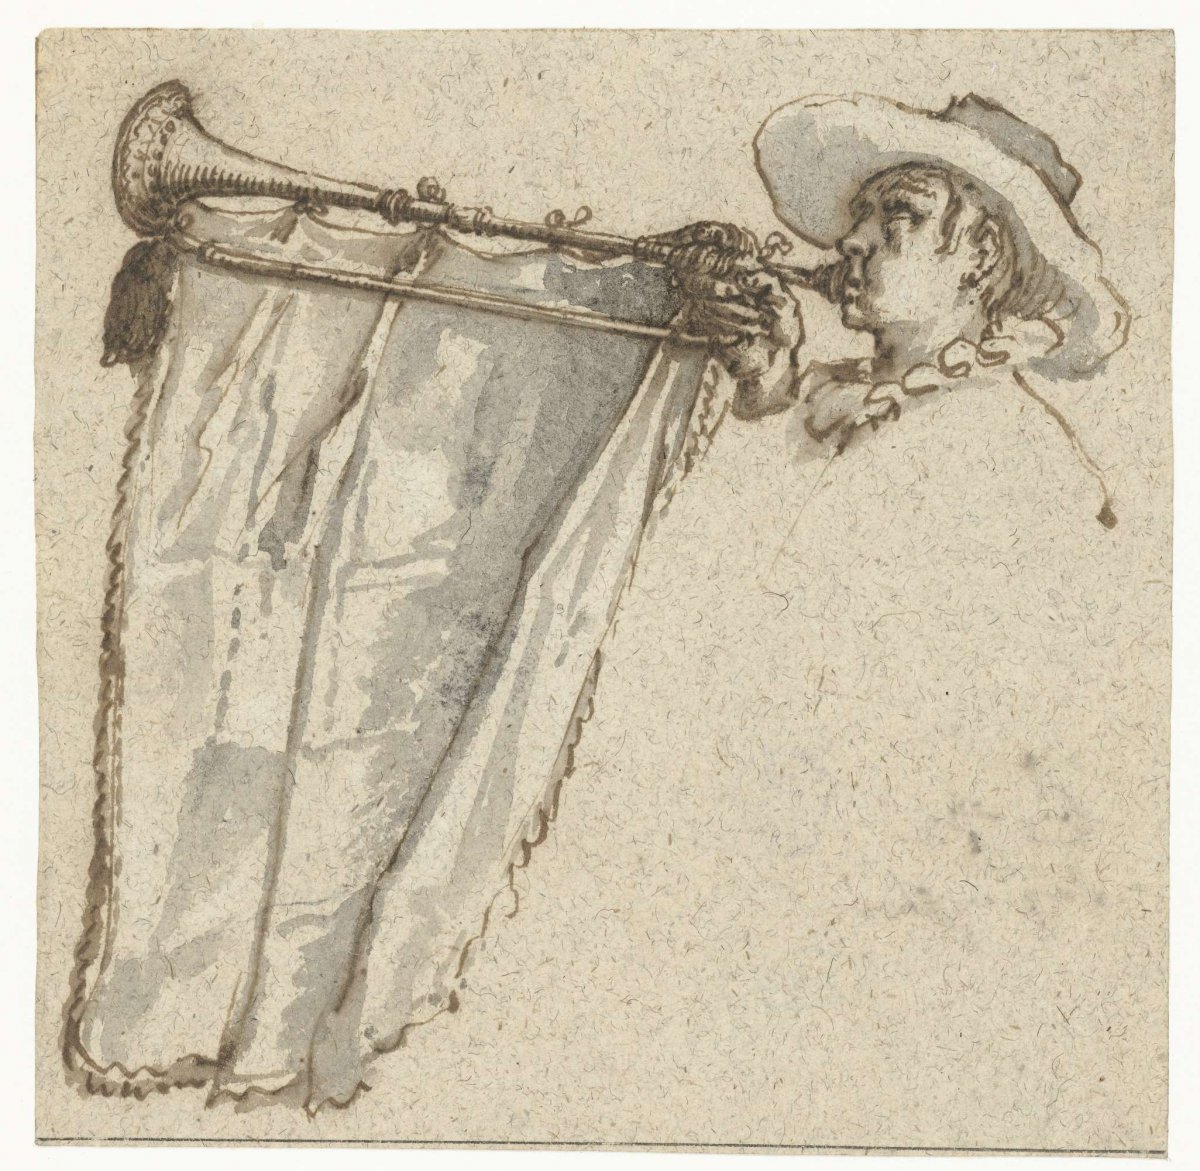 Trumpeter, Jacques de Gheyn (II), 1575 - 1629